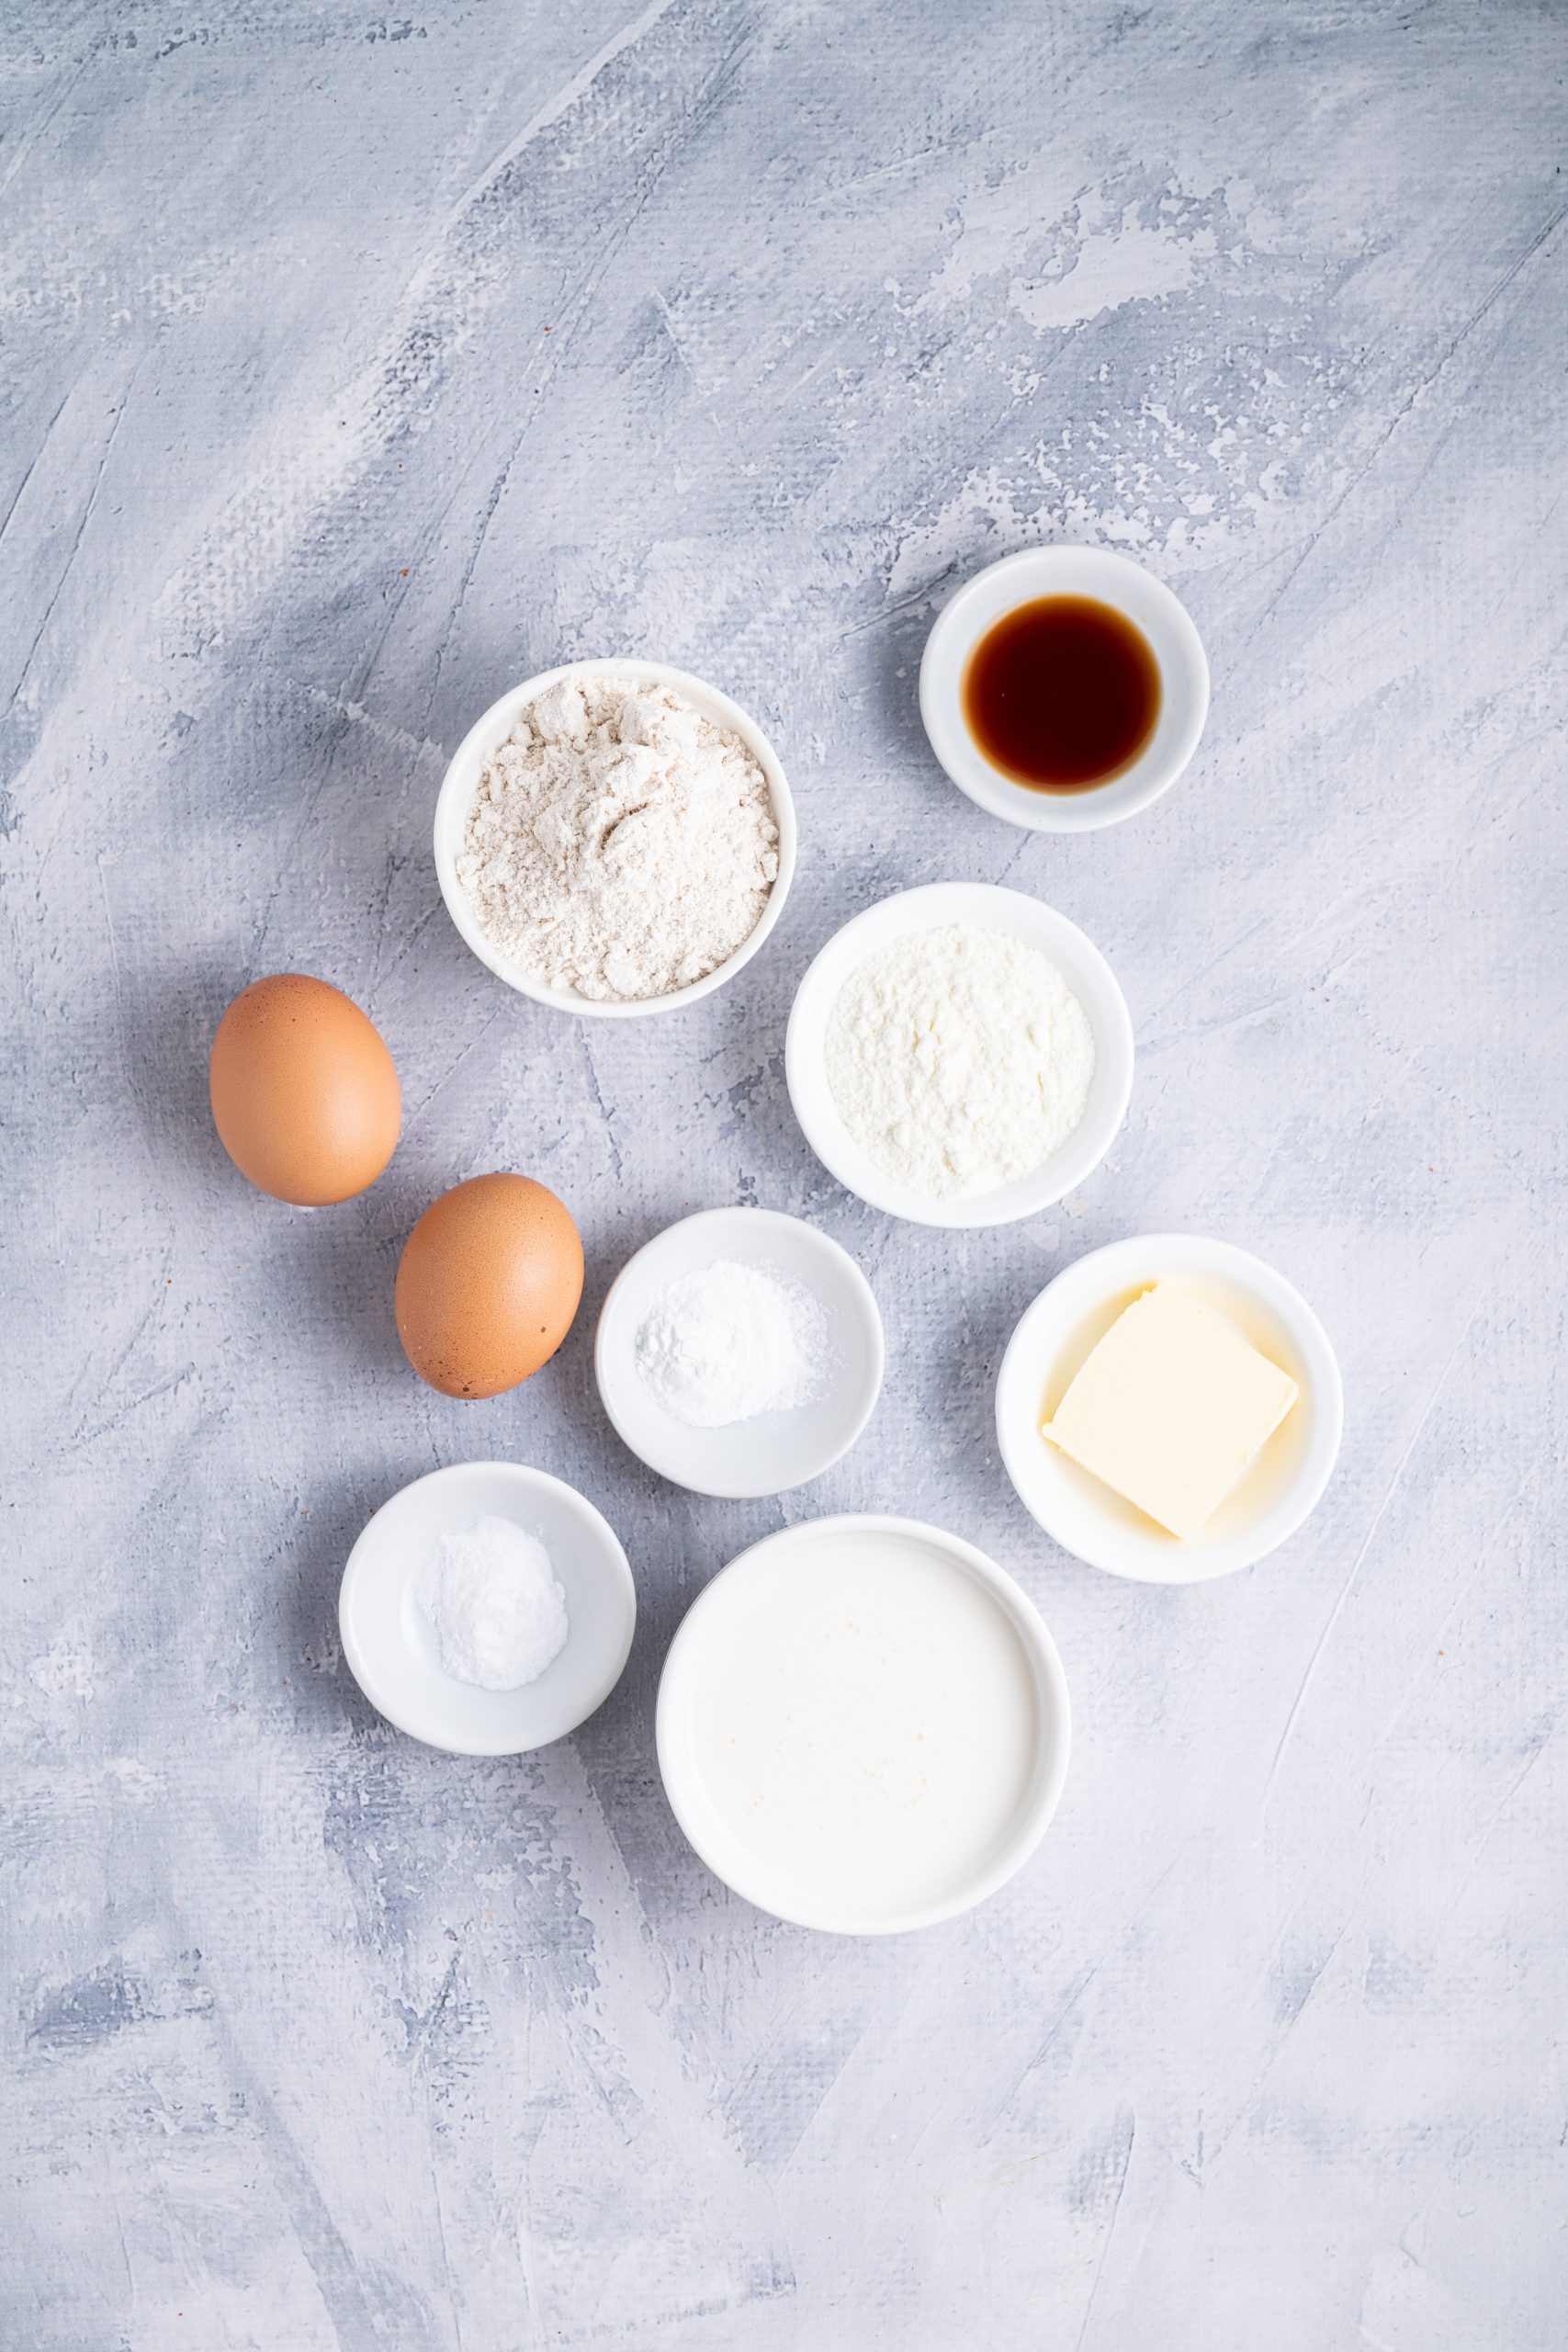 Ingredients to High Protein Pancakes
 